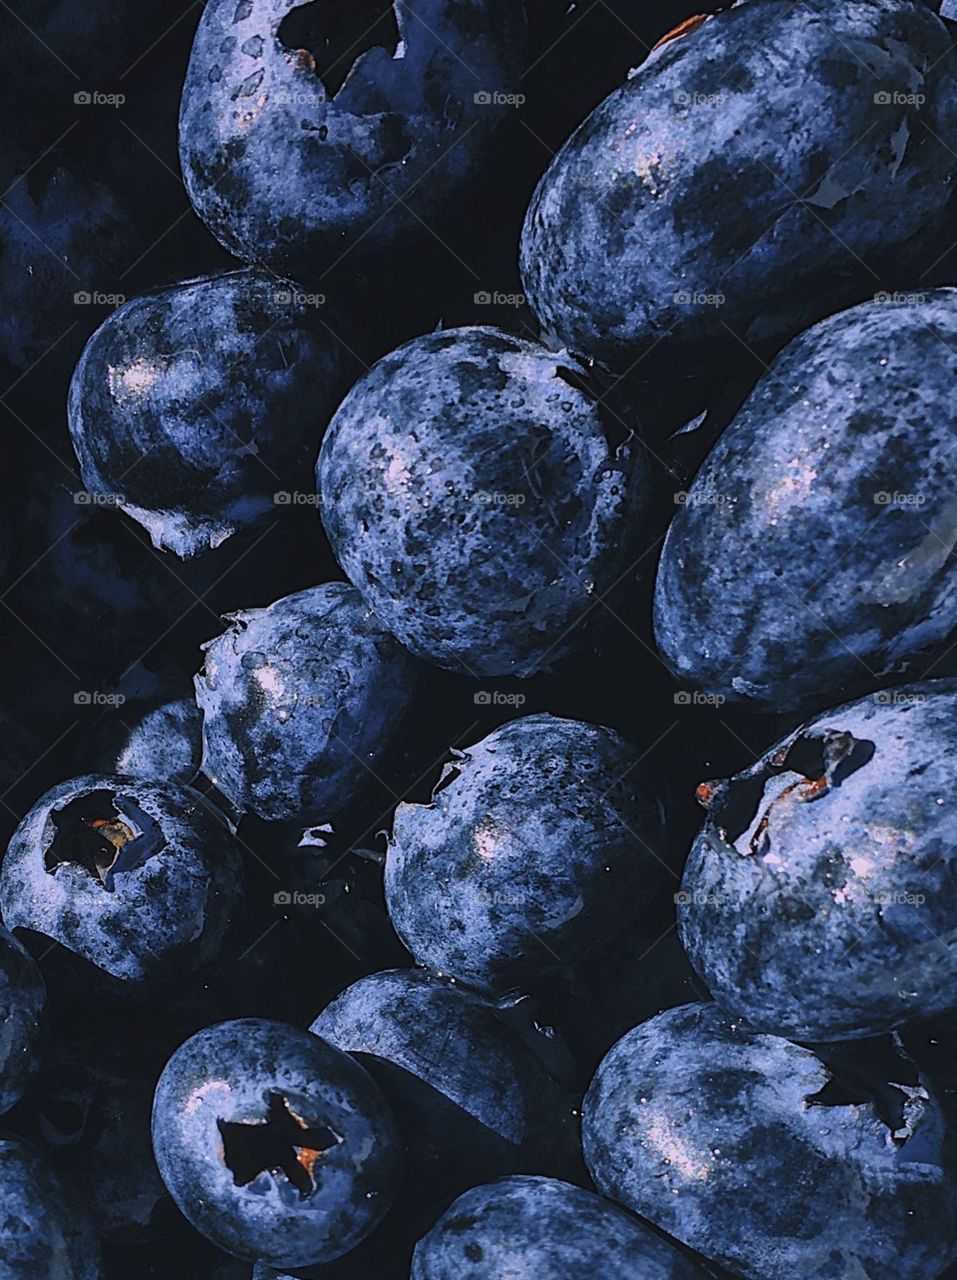 You'll never regret eating blueberries